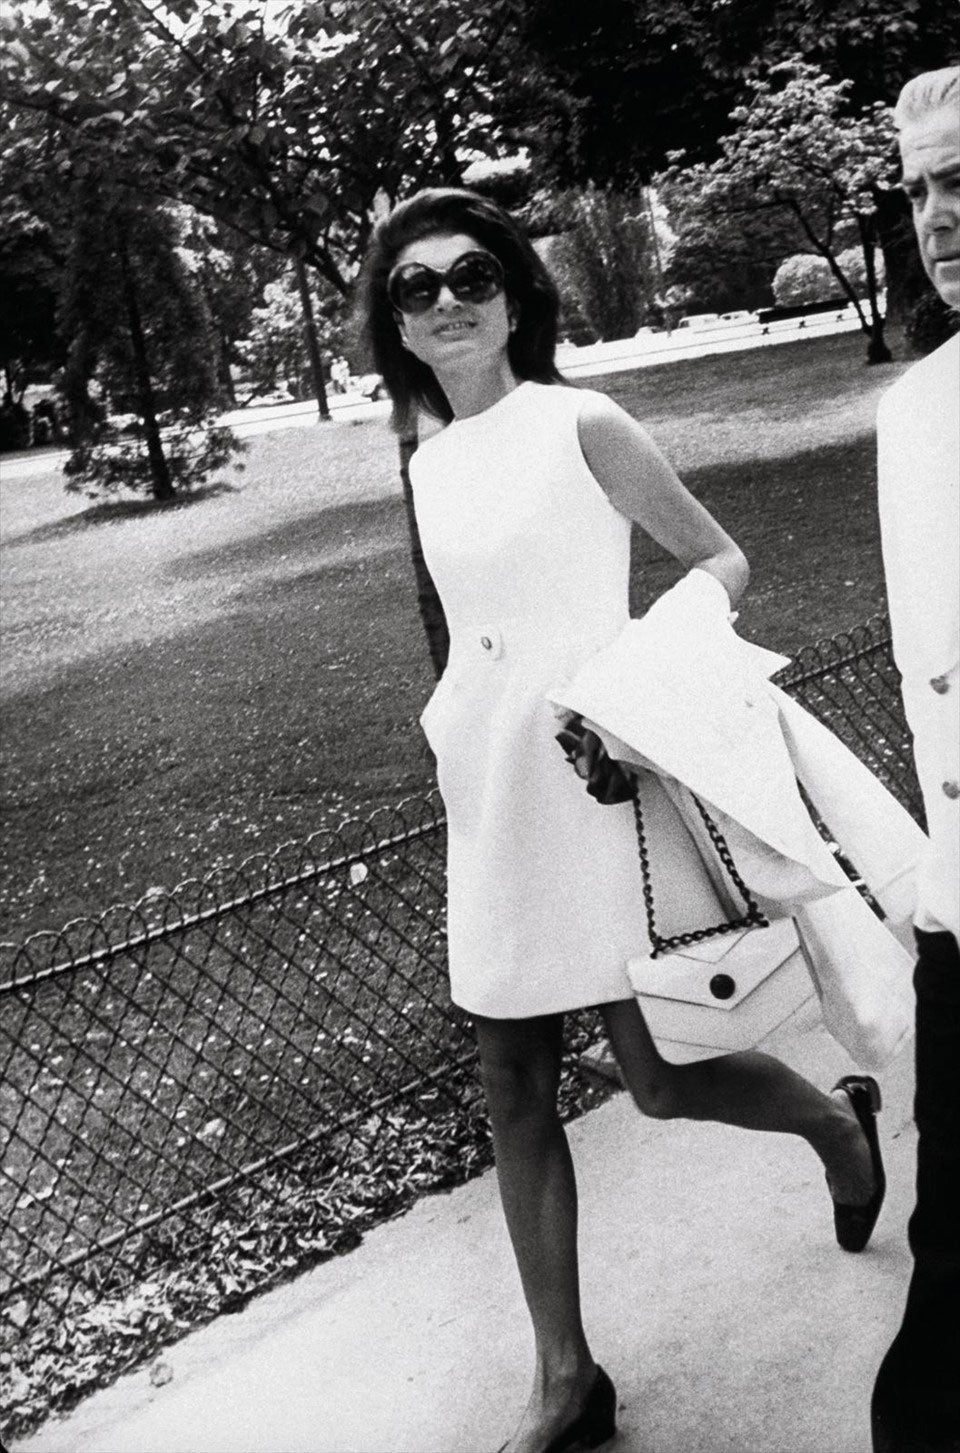 Jackie O wearing sunglasses and plain white dress